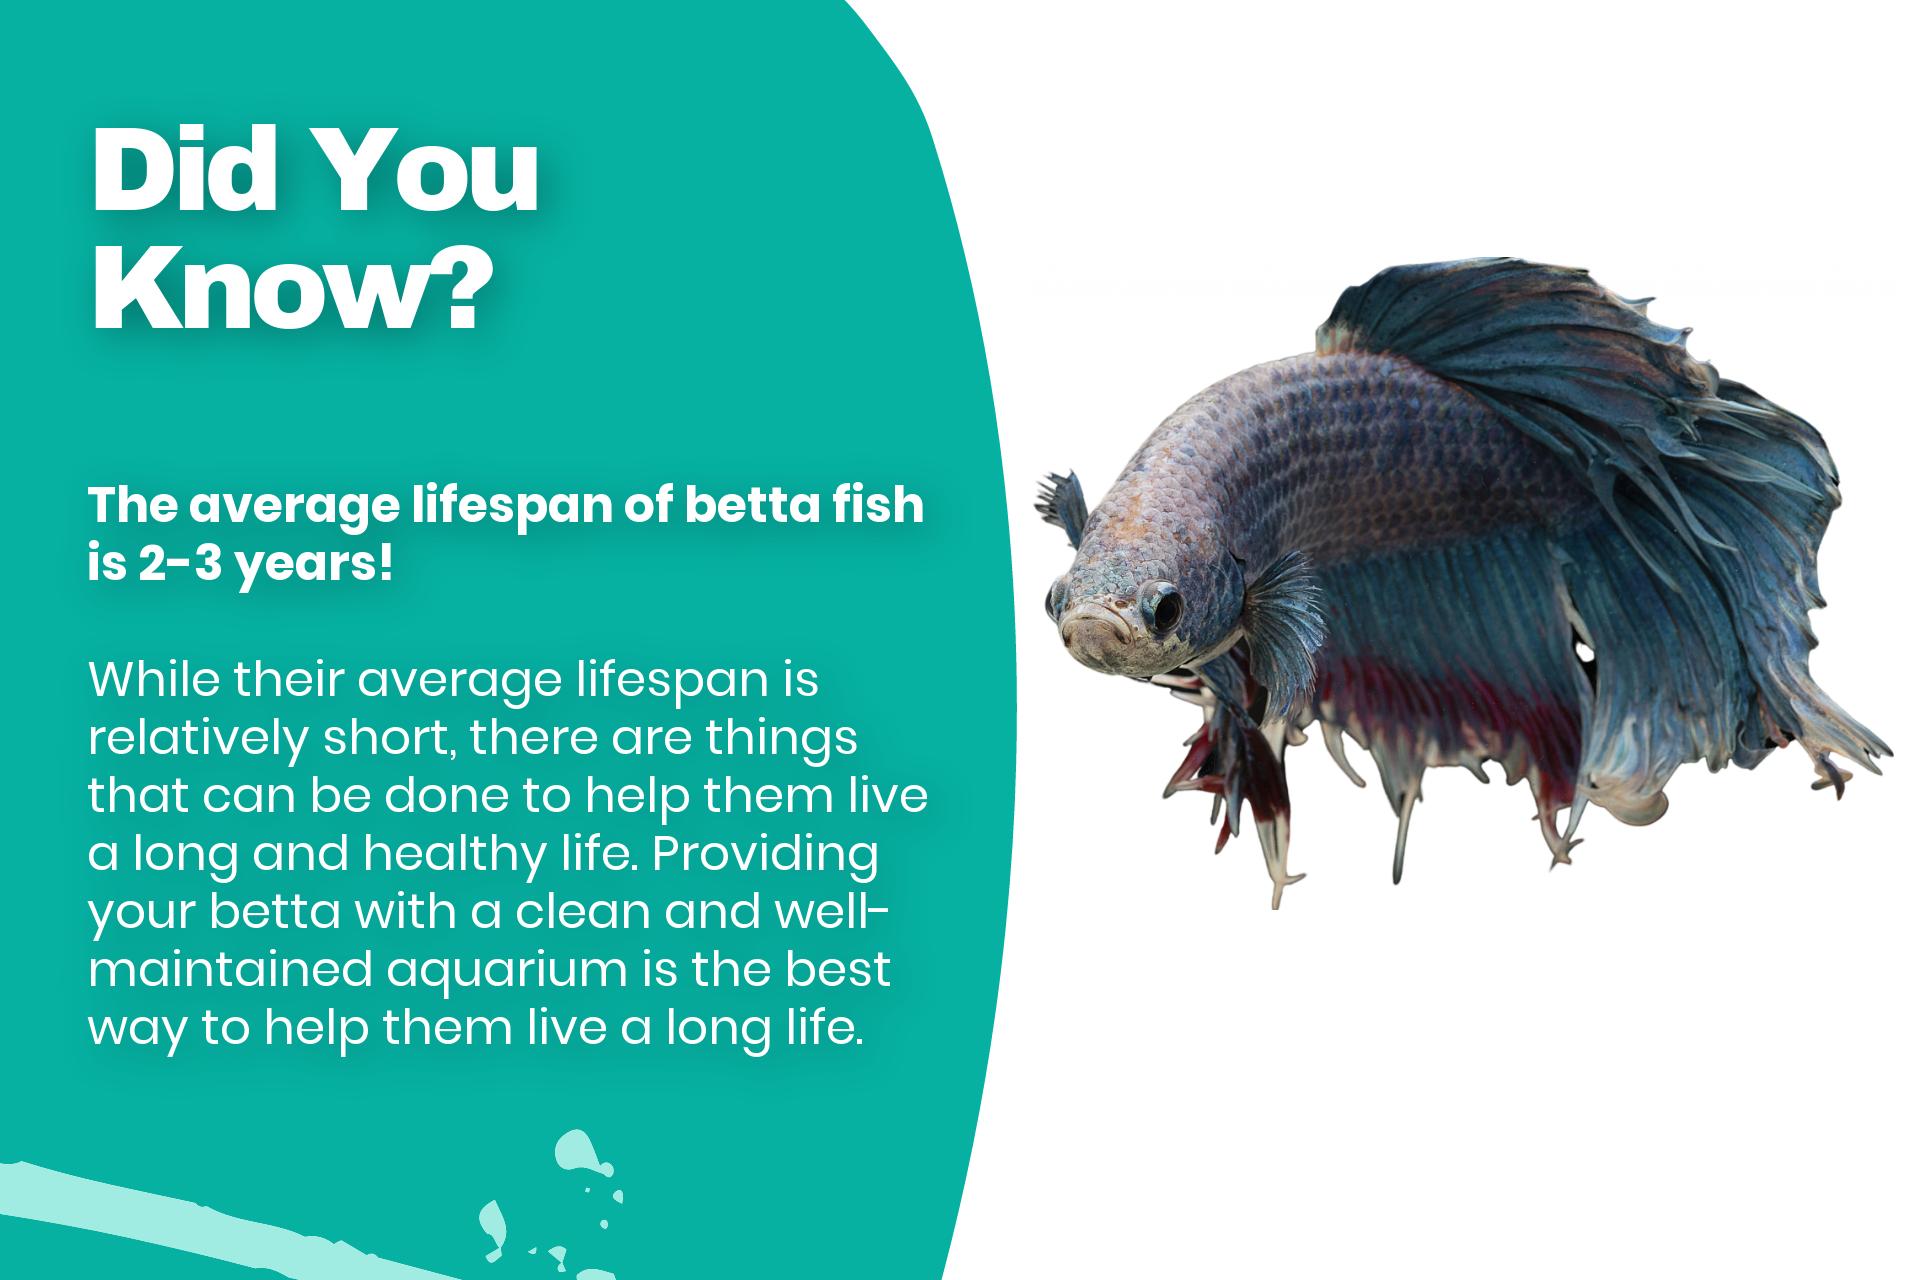 The average lifespan of betta fish is 2-3 years